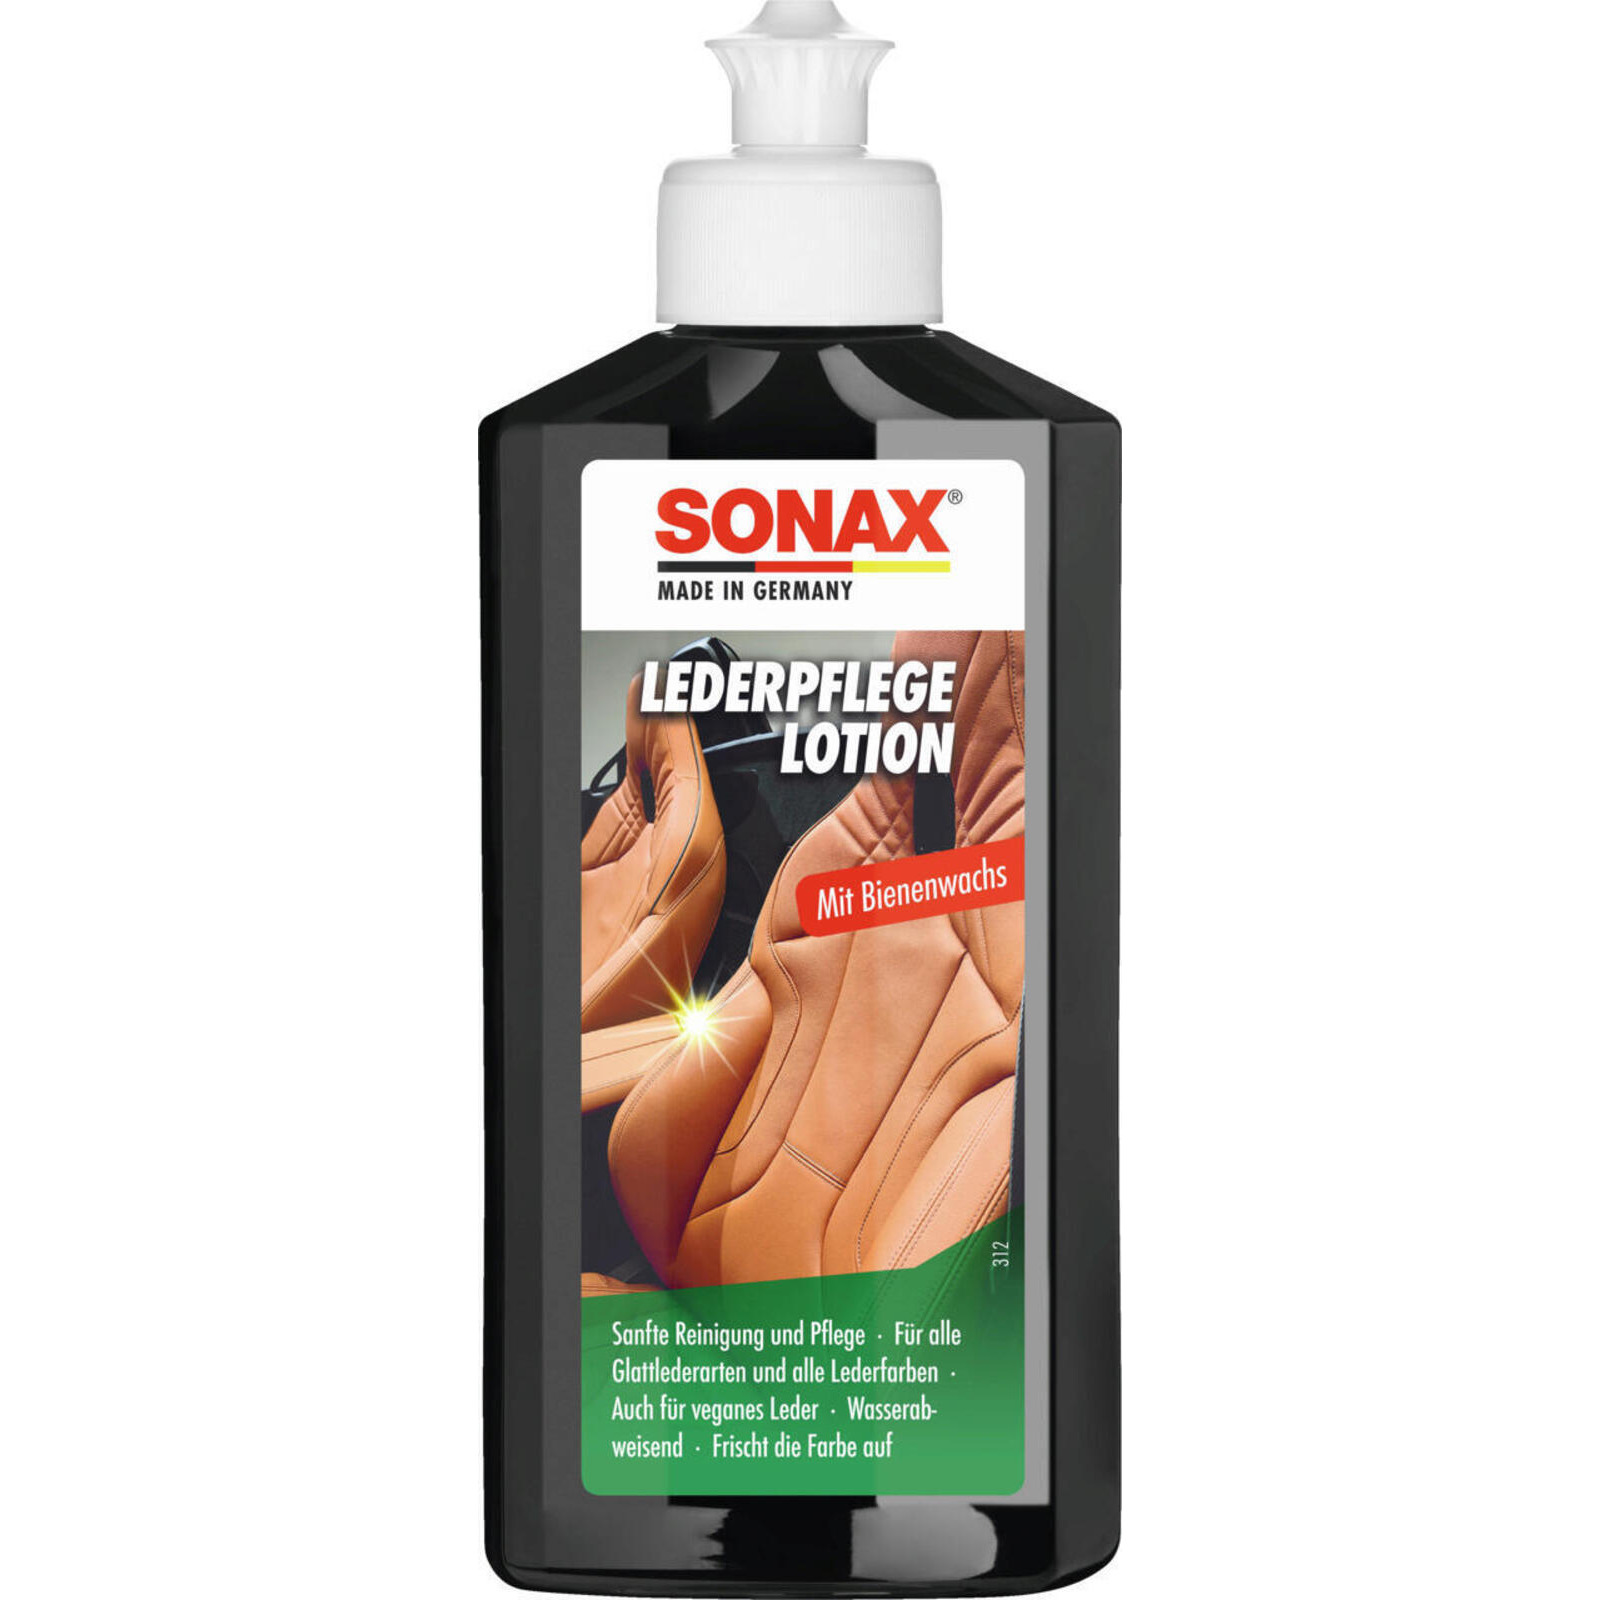 SONAX LederPflegeLotion 250ml